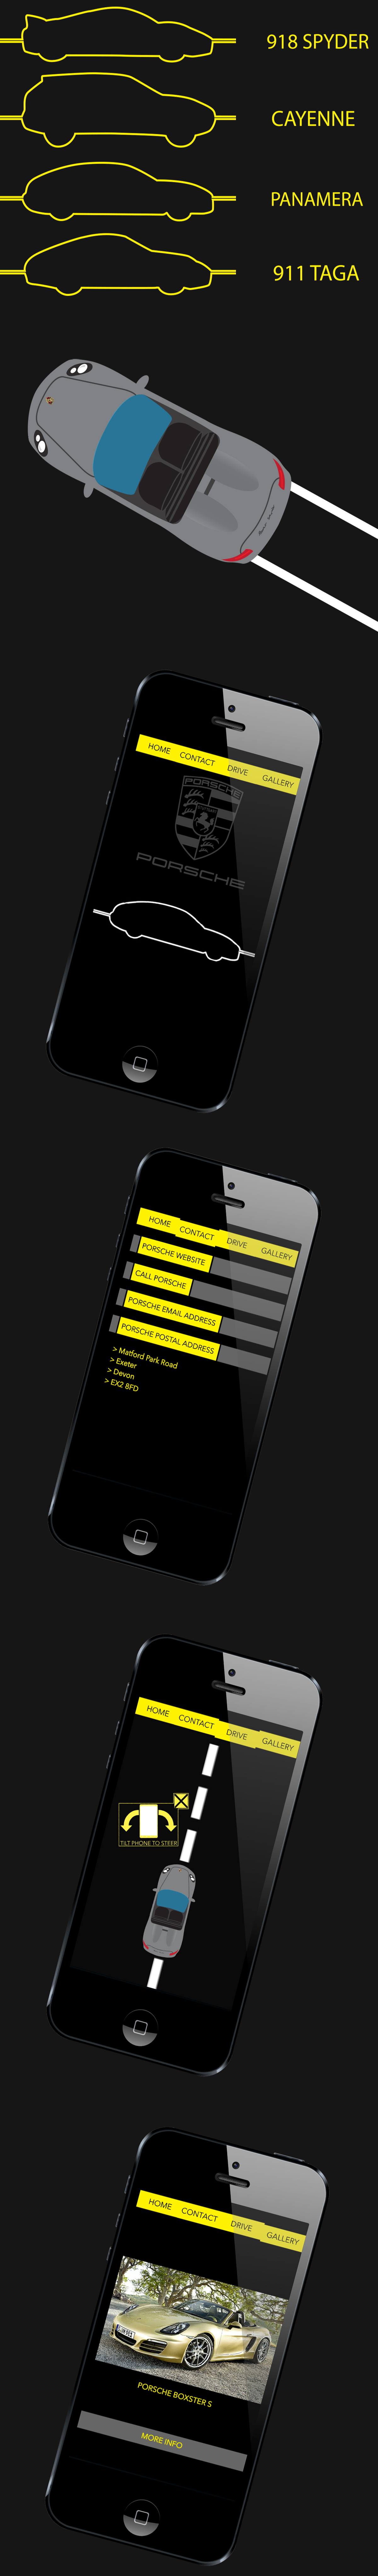 Porsche app design application ios android phone Web develop UI ux Flash Cars Motor Layout